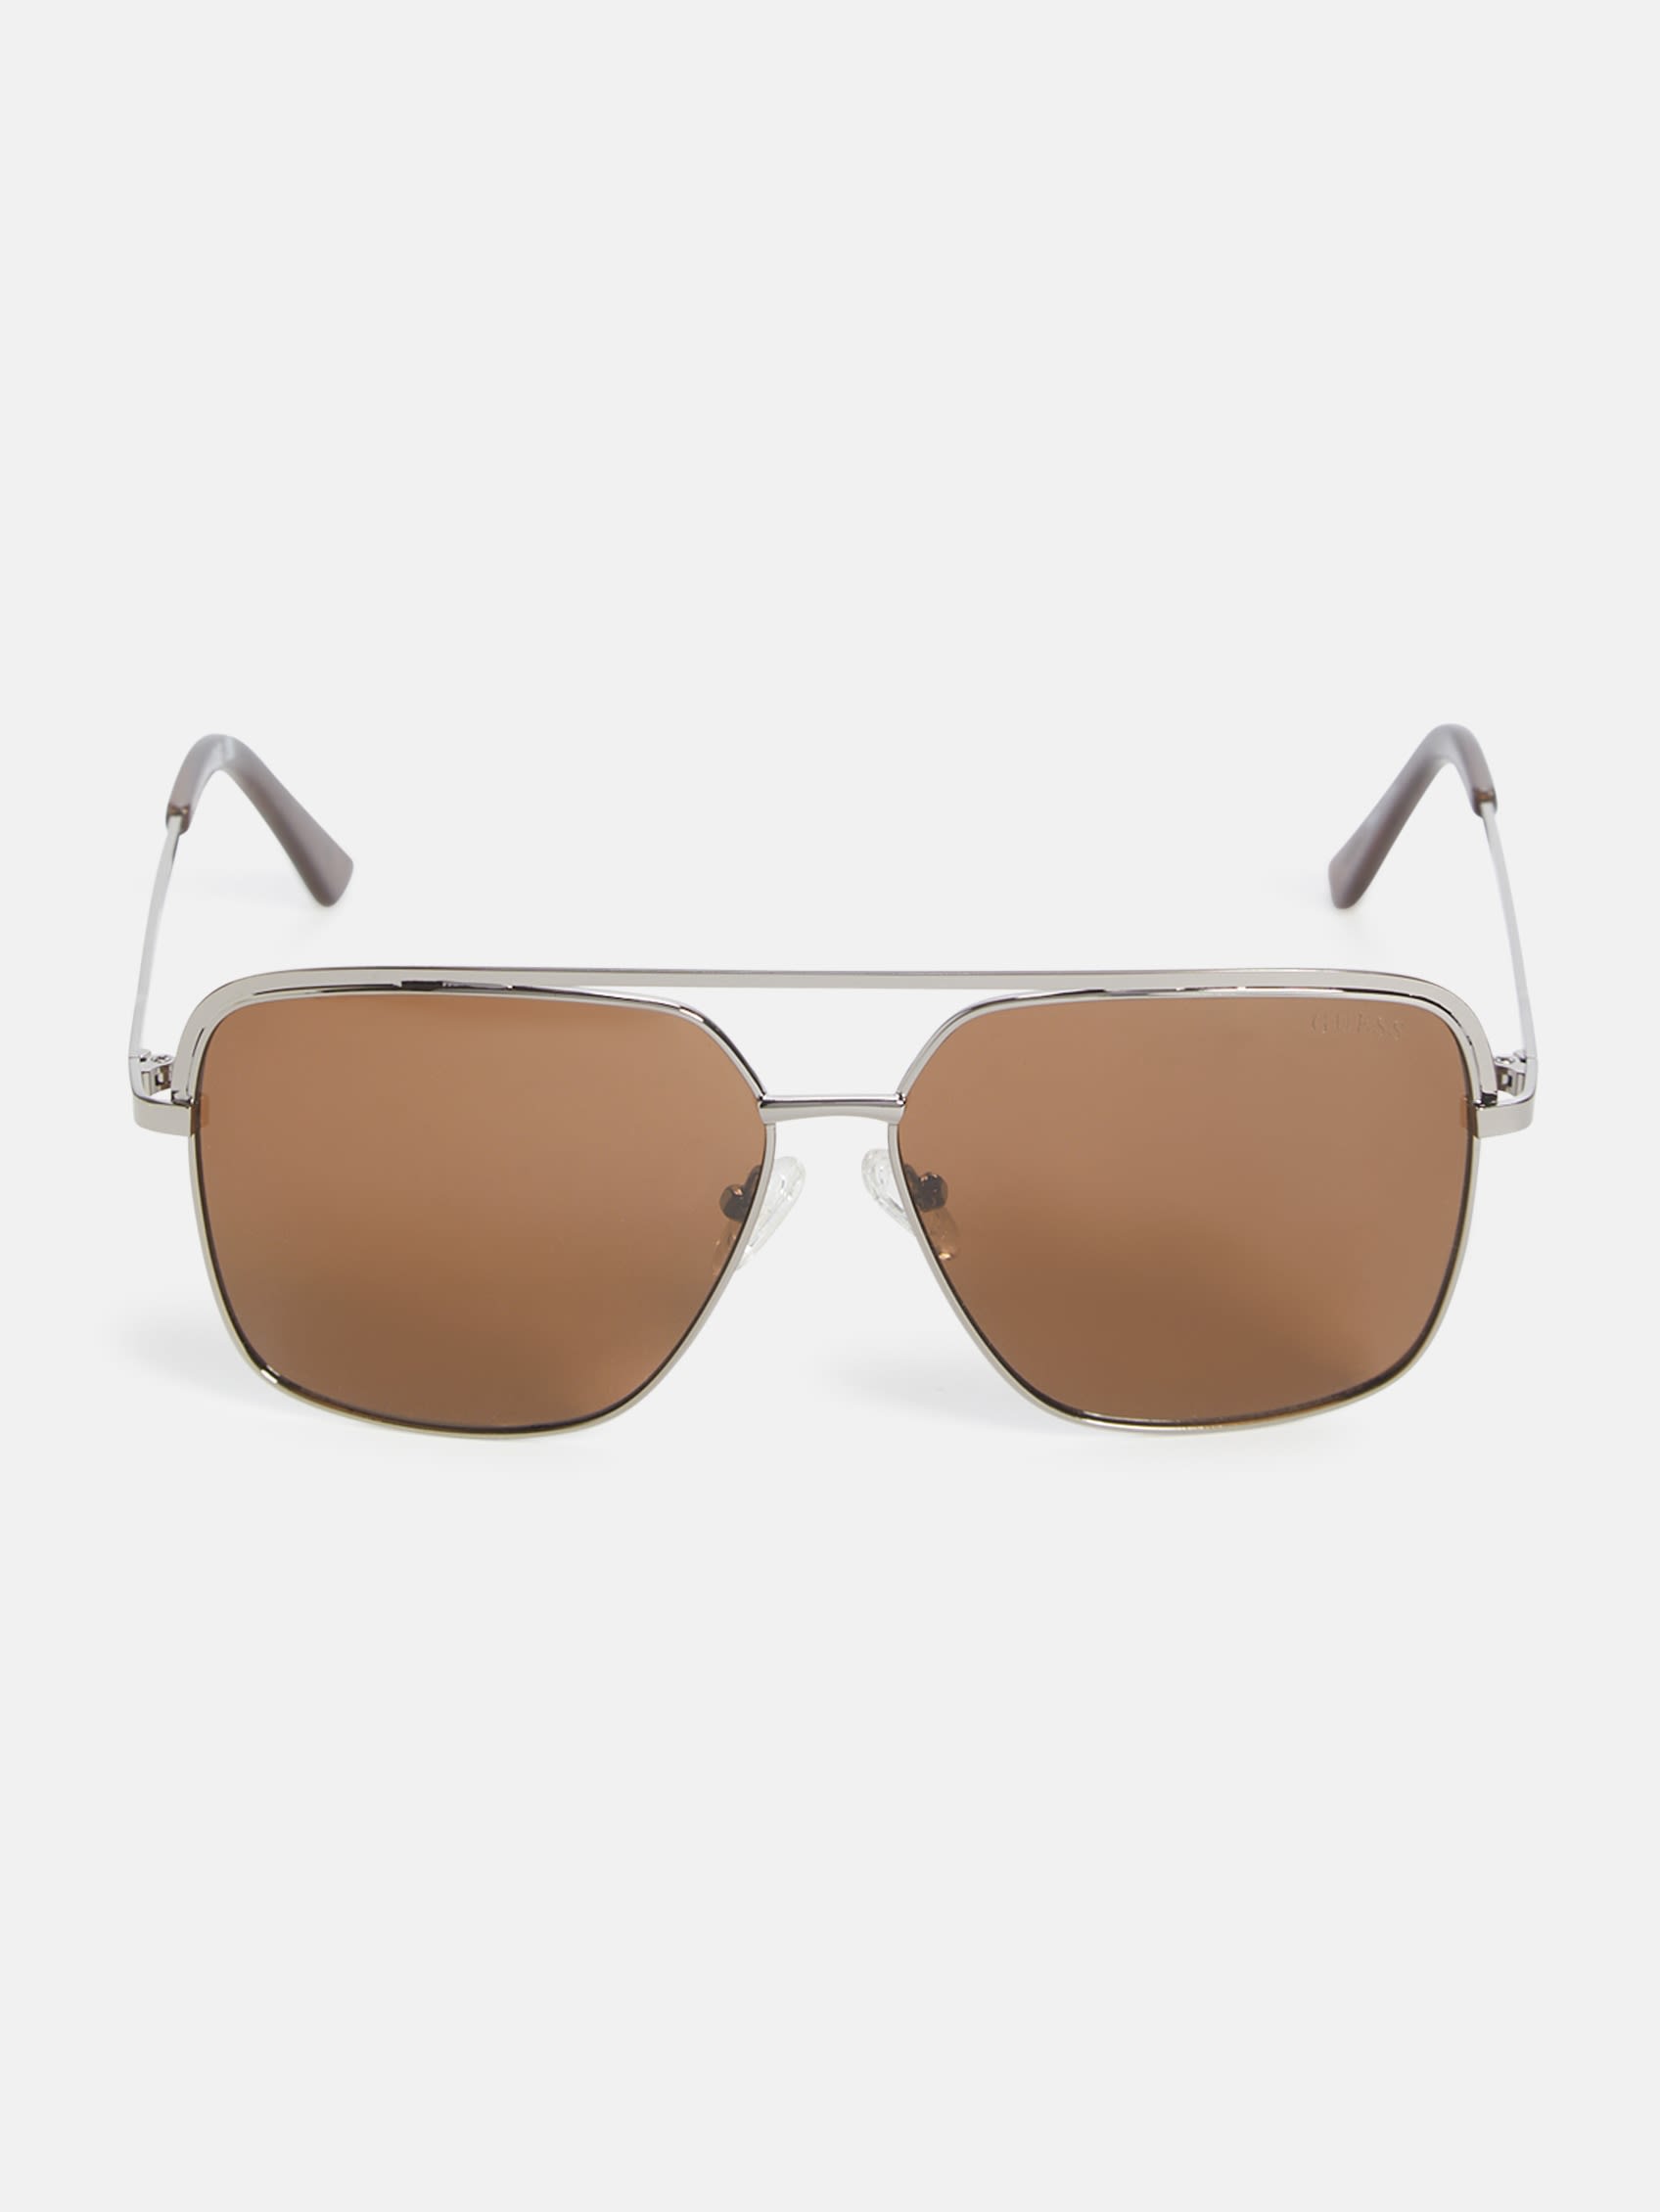 Guess Factory Oversize Navigator Sunglasses In Metallic